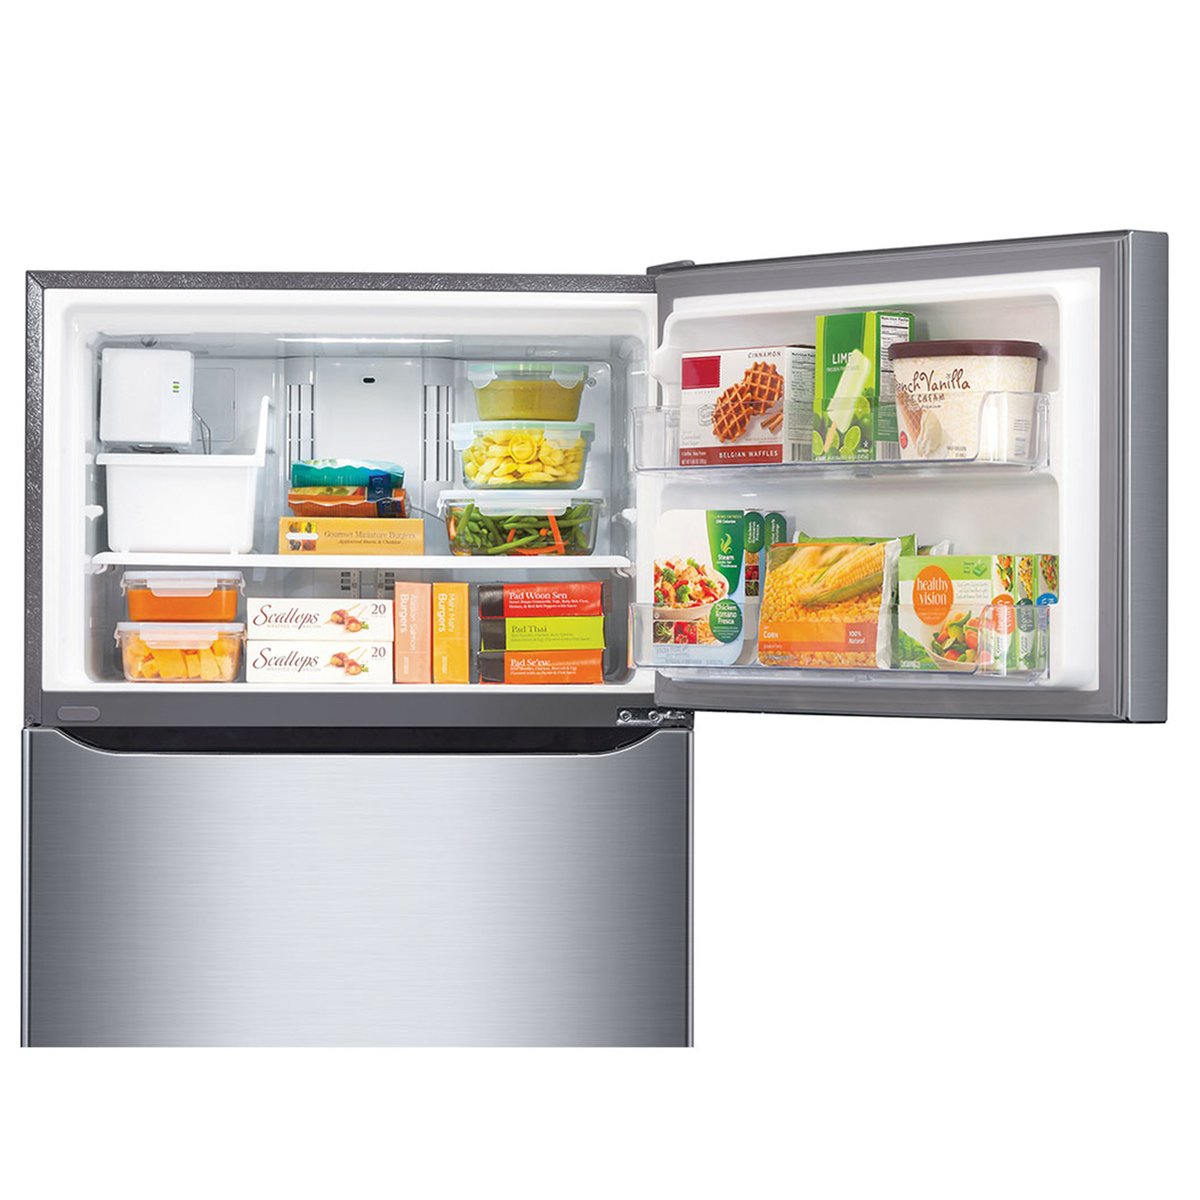 LG Double Door Refrigerator GRU932SSDM 703Ltr, Multi Air Flow, LED Panel Lighting, Smart Diagnosis